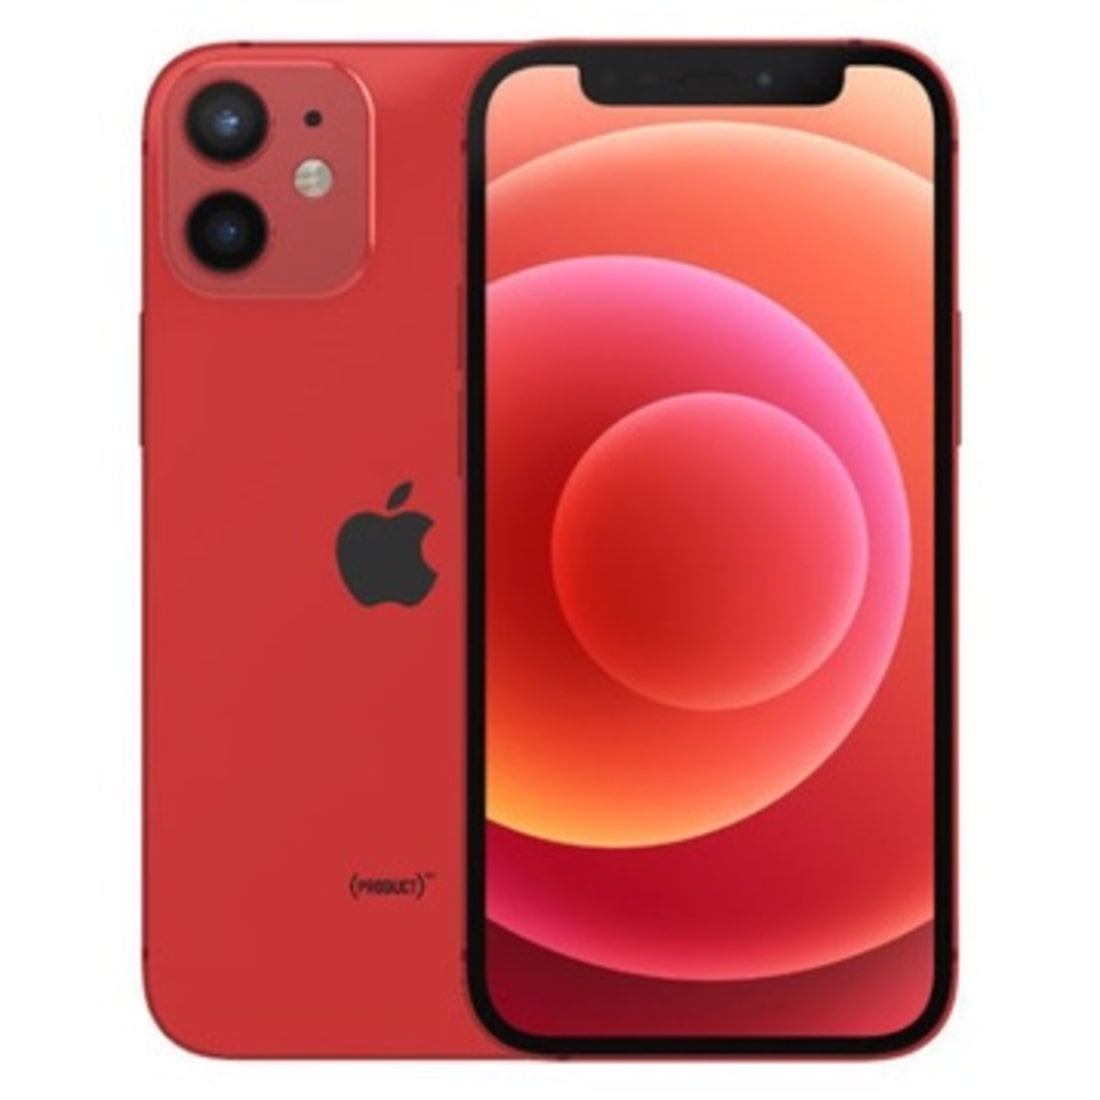 iPhone 12 màu đỏ